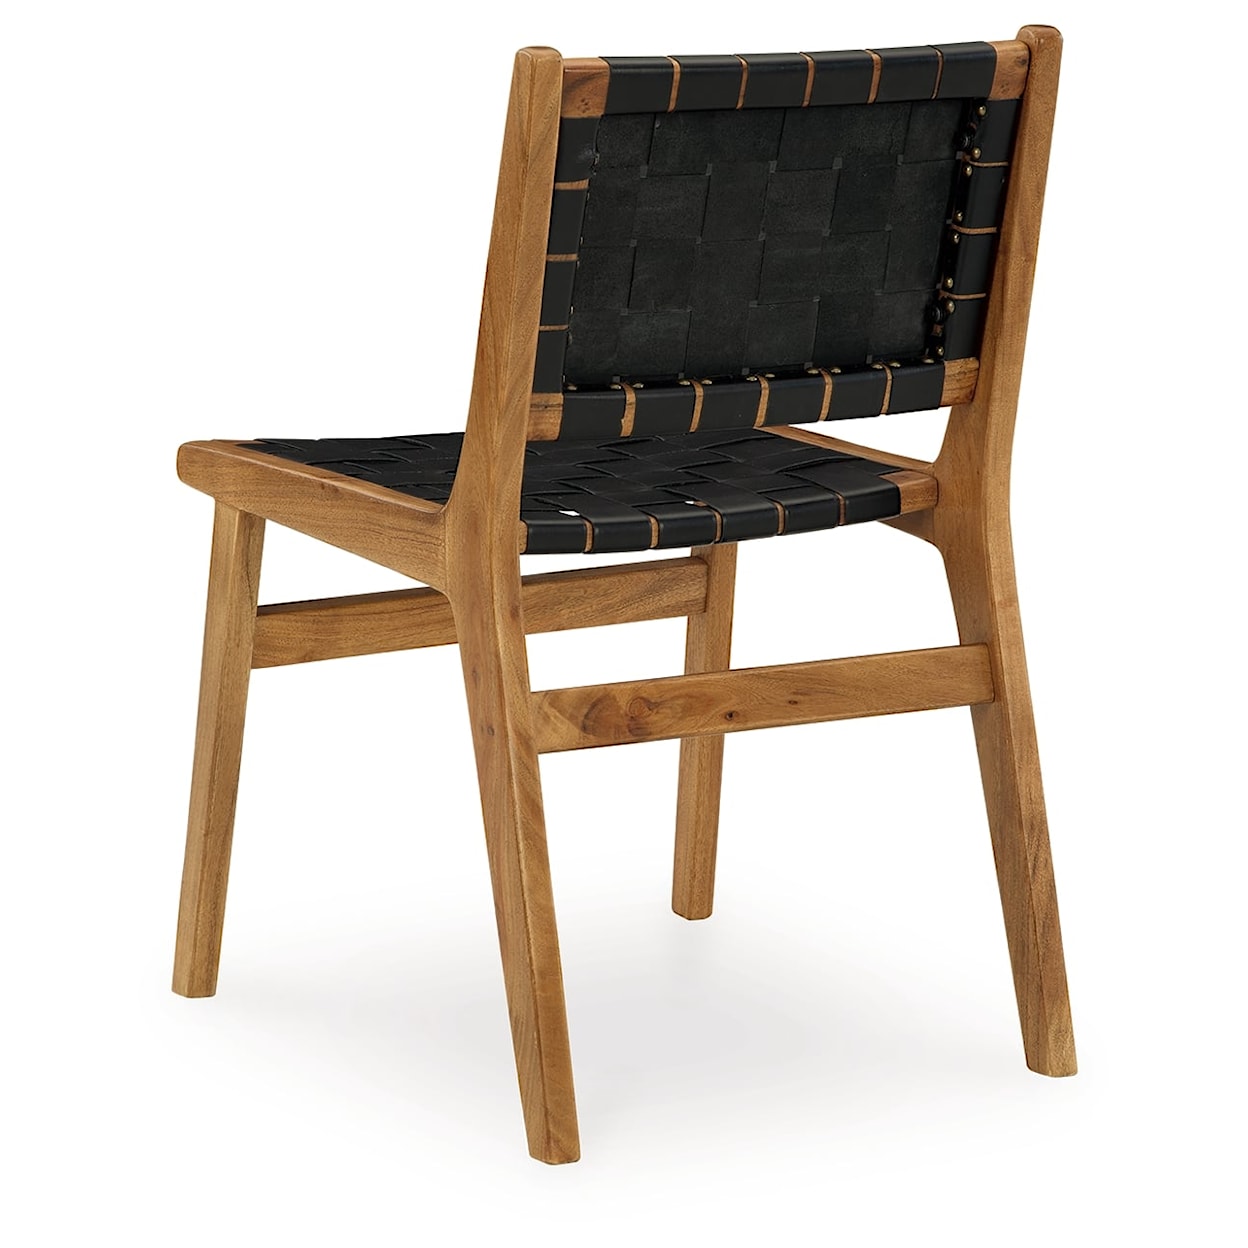 Ashley Furniture Signature Design Fortmaine Dining Chair